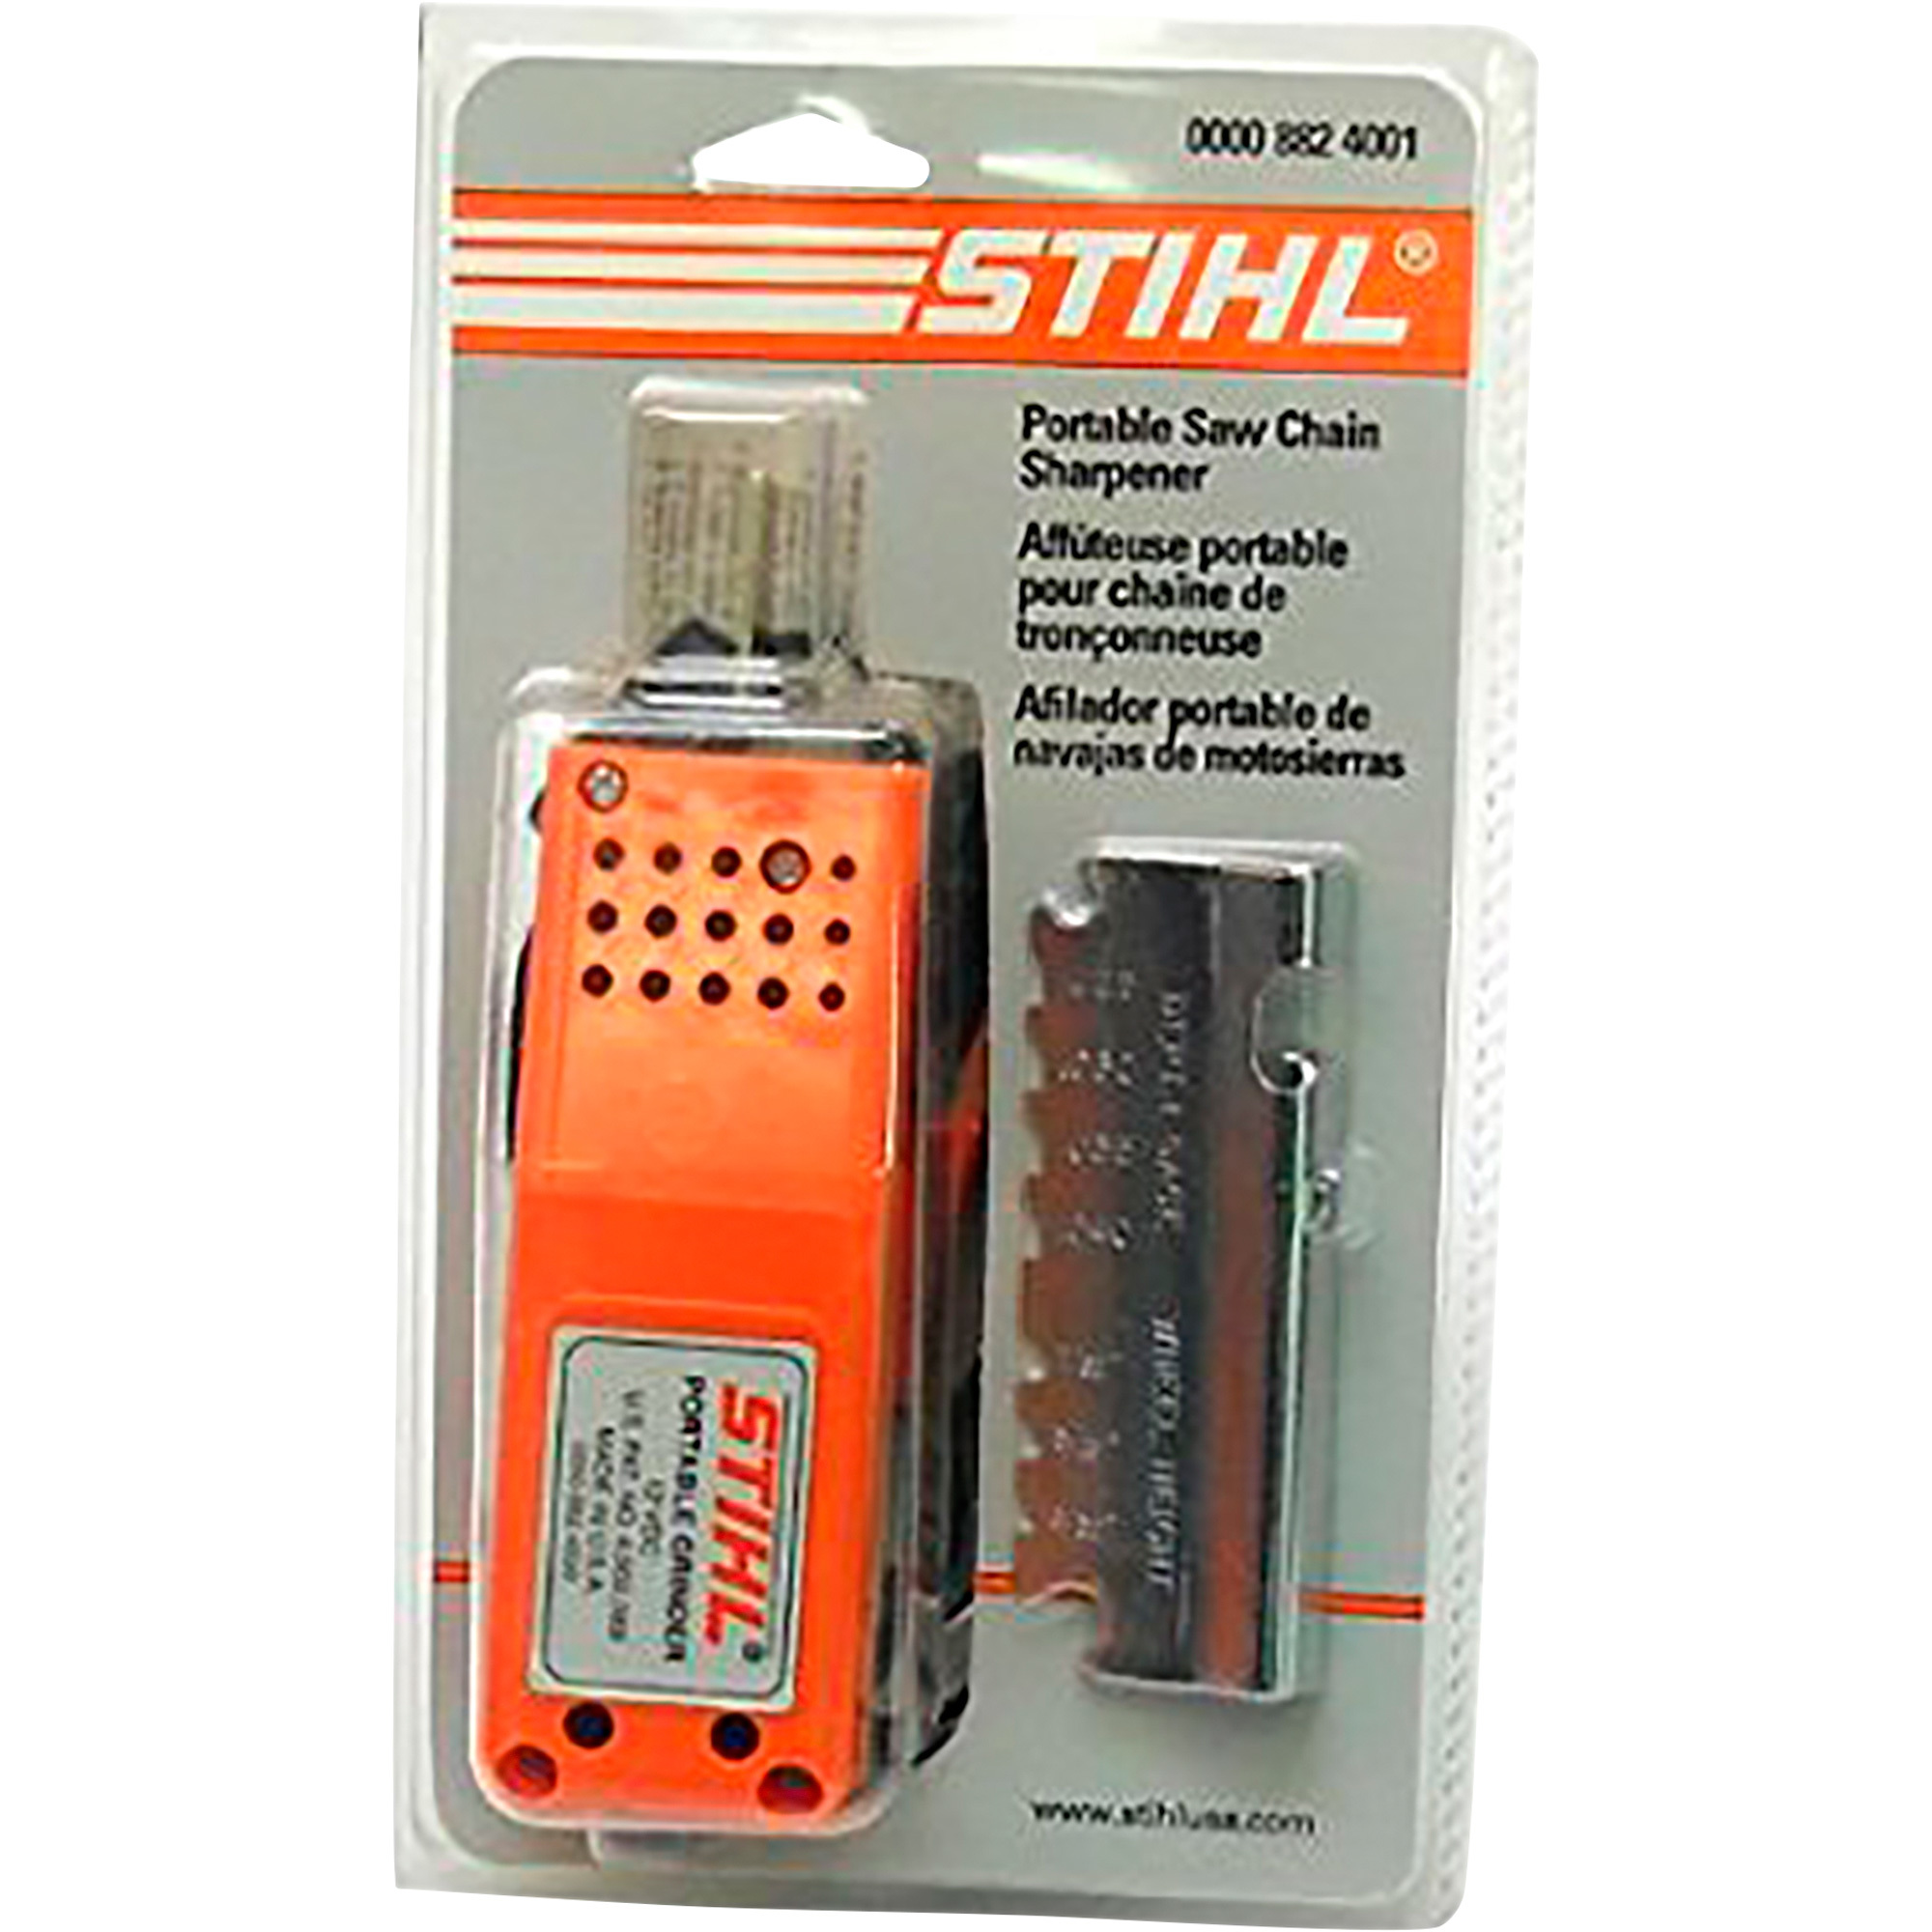 STIHL Saw Chain Sharpener â Model 0000 882 4001